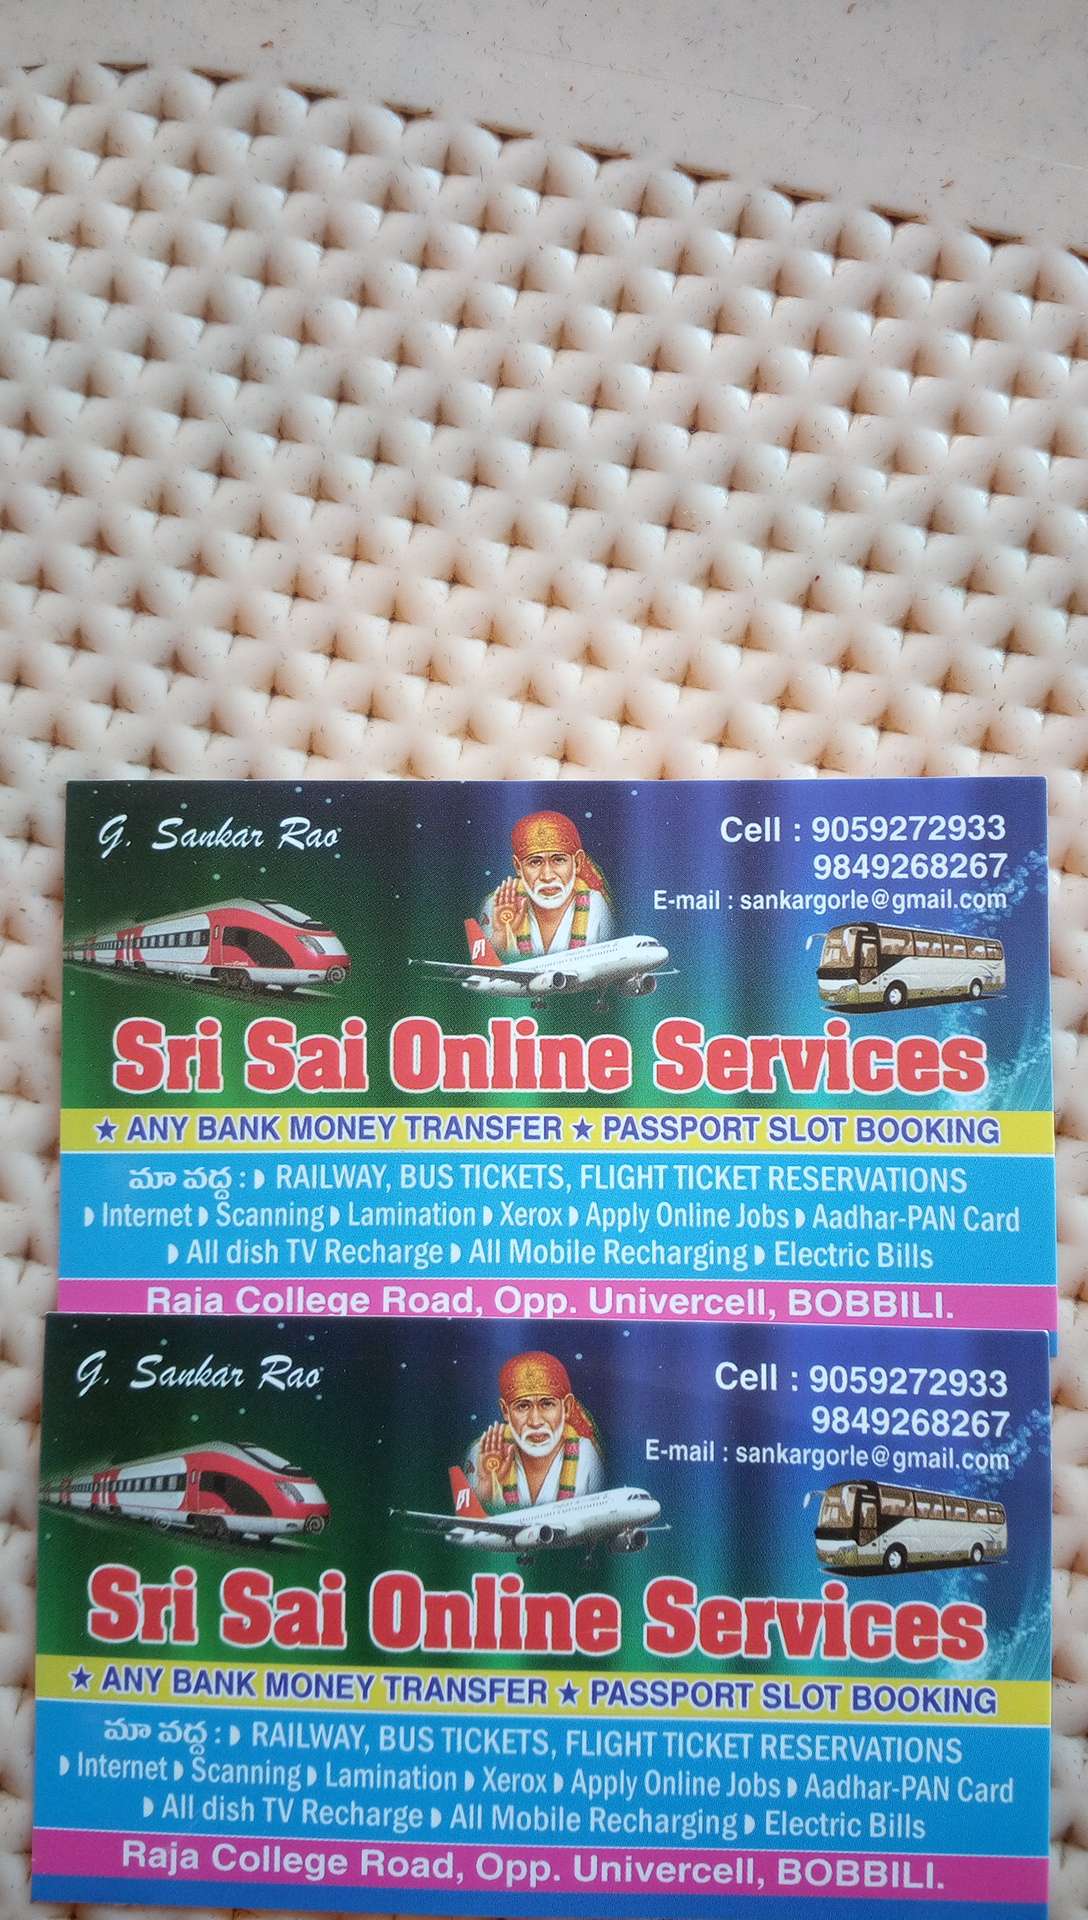 Sri Saionline Services